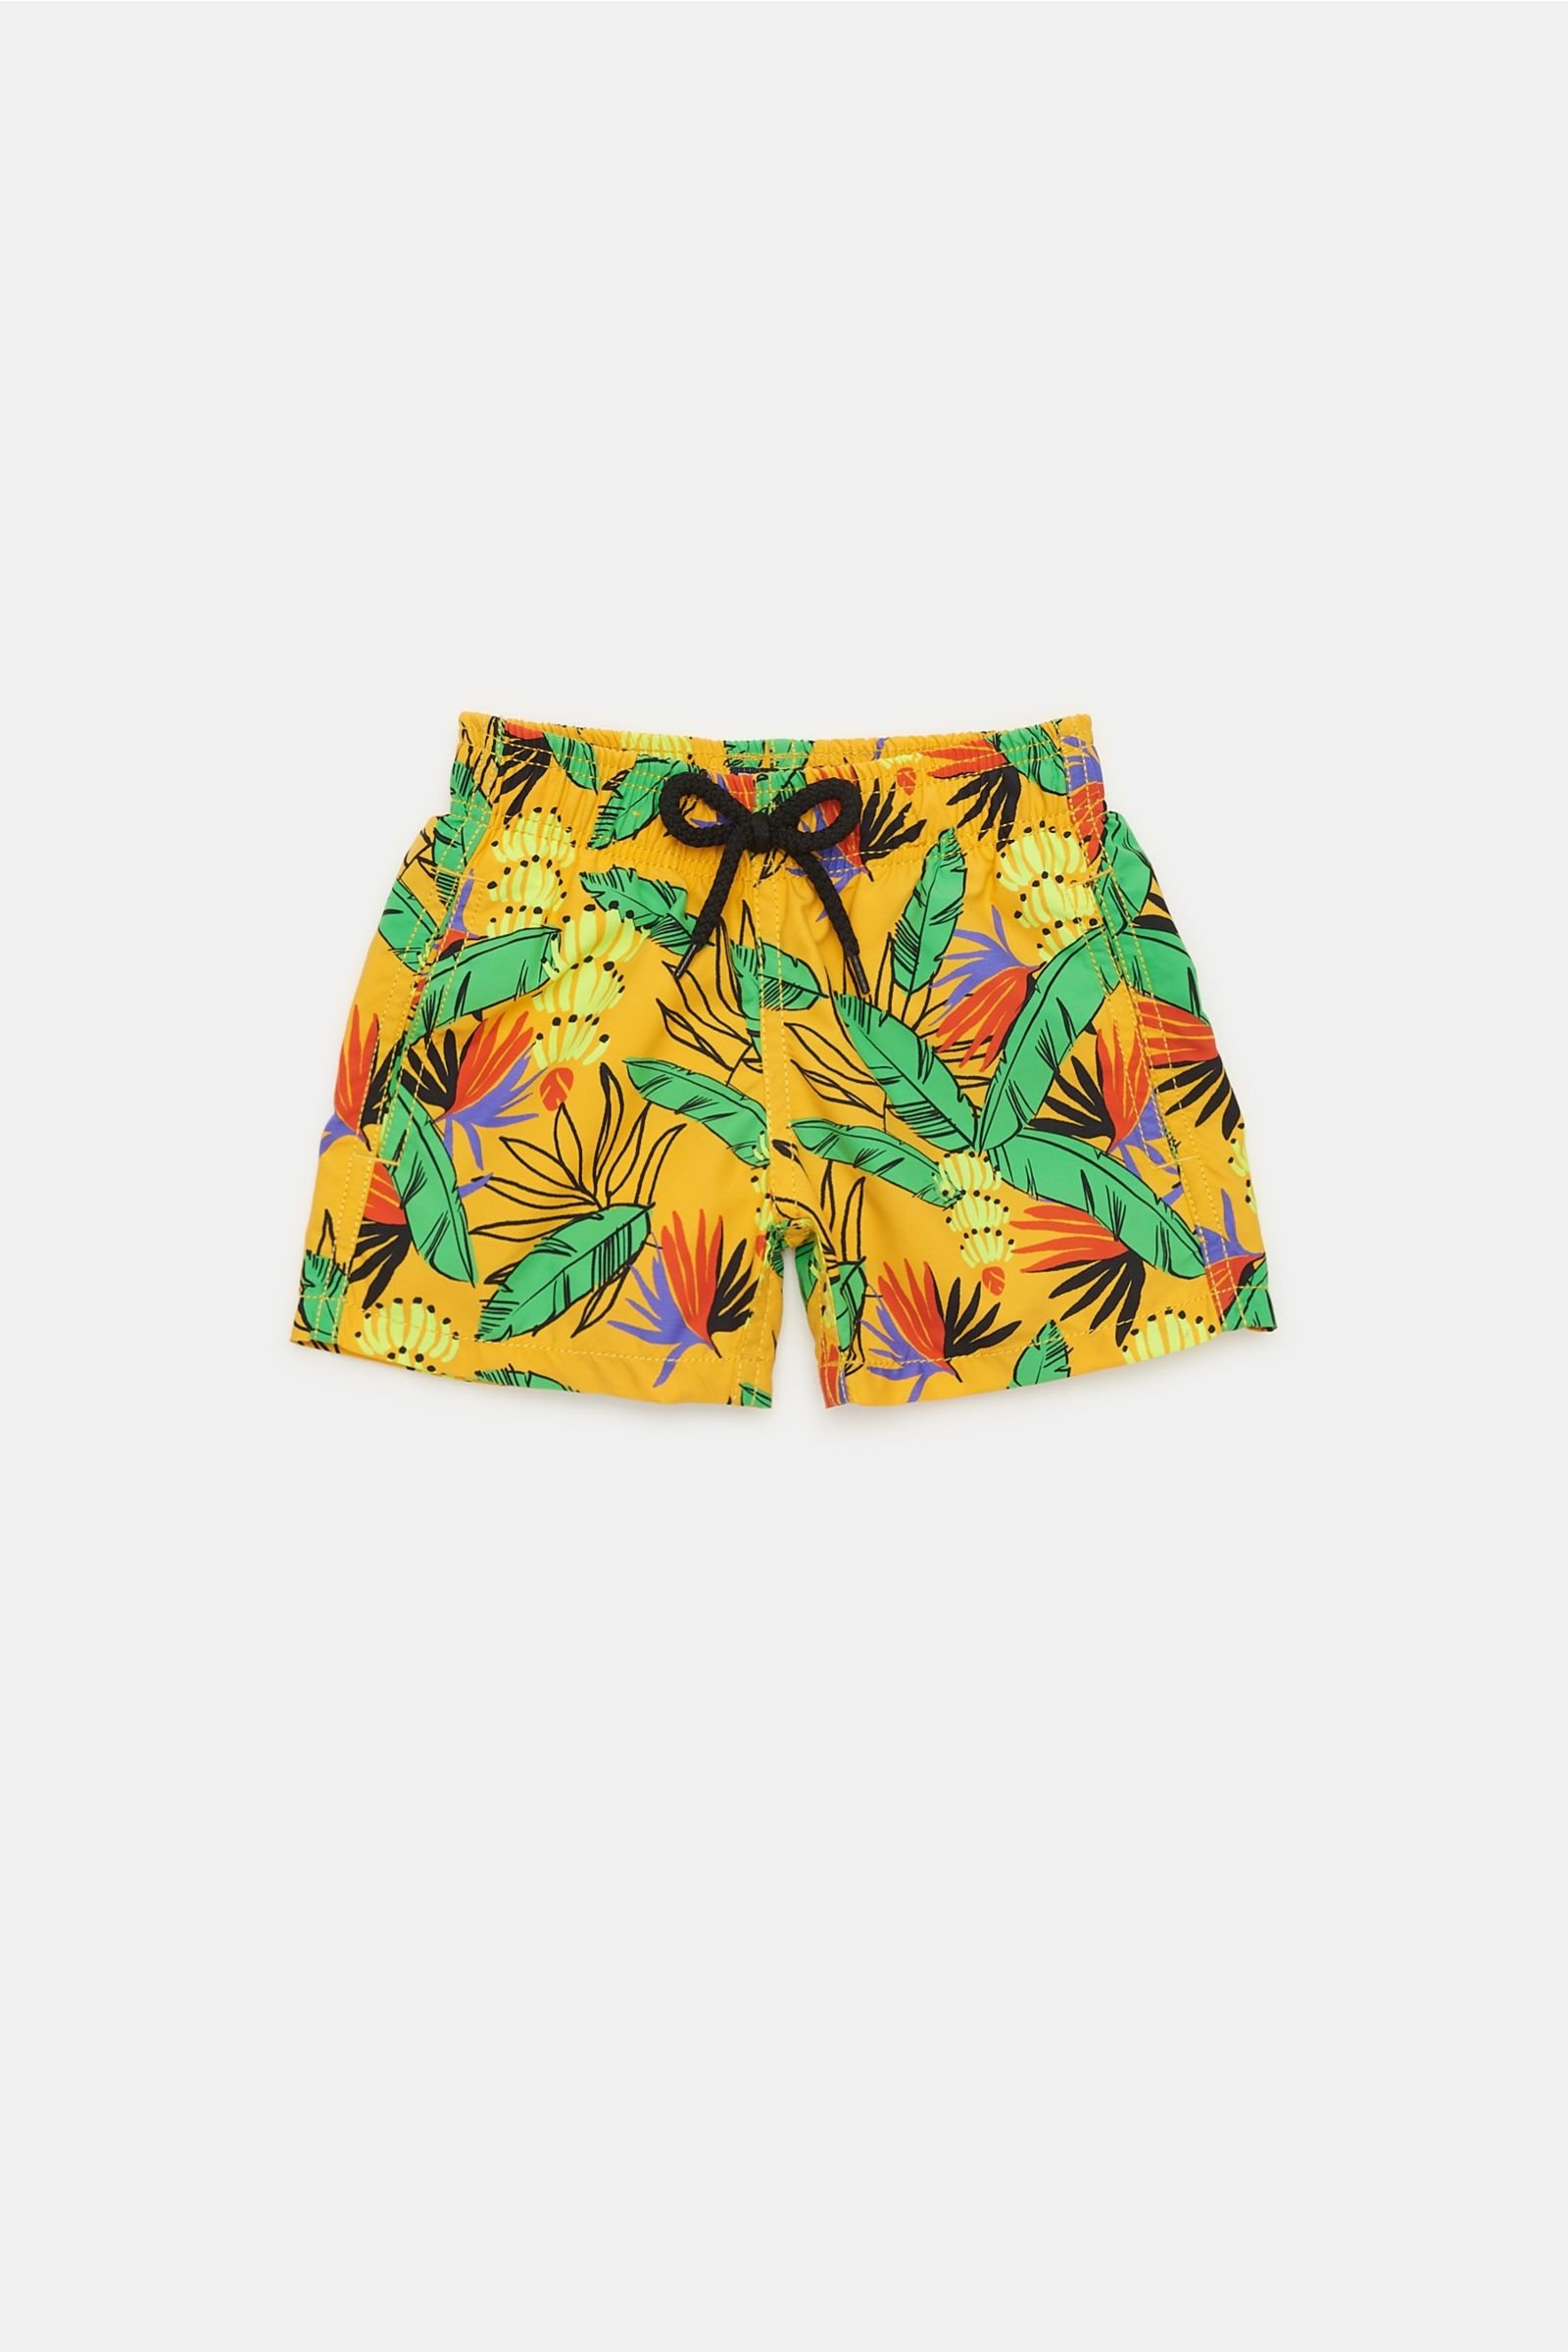 Kids swim shorts 'Jim' yellow/green patterned